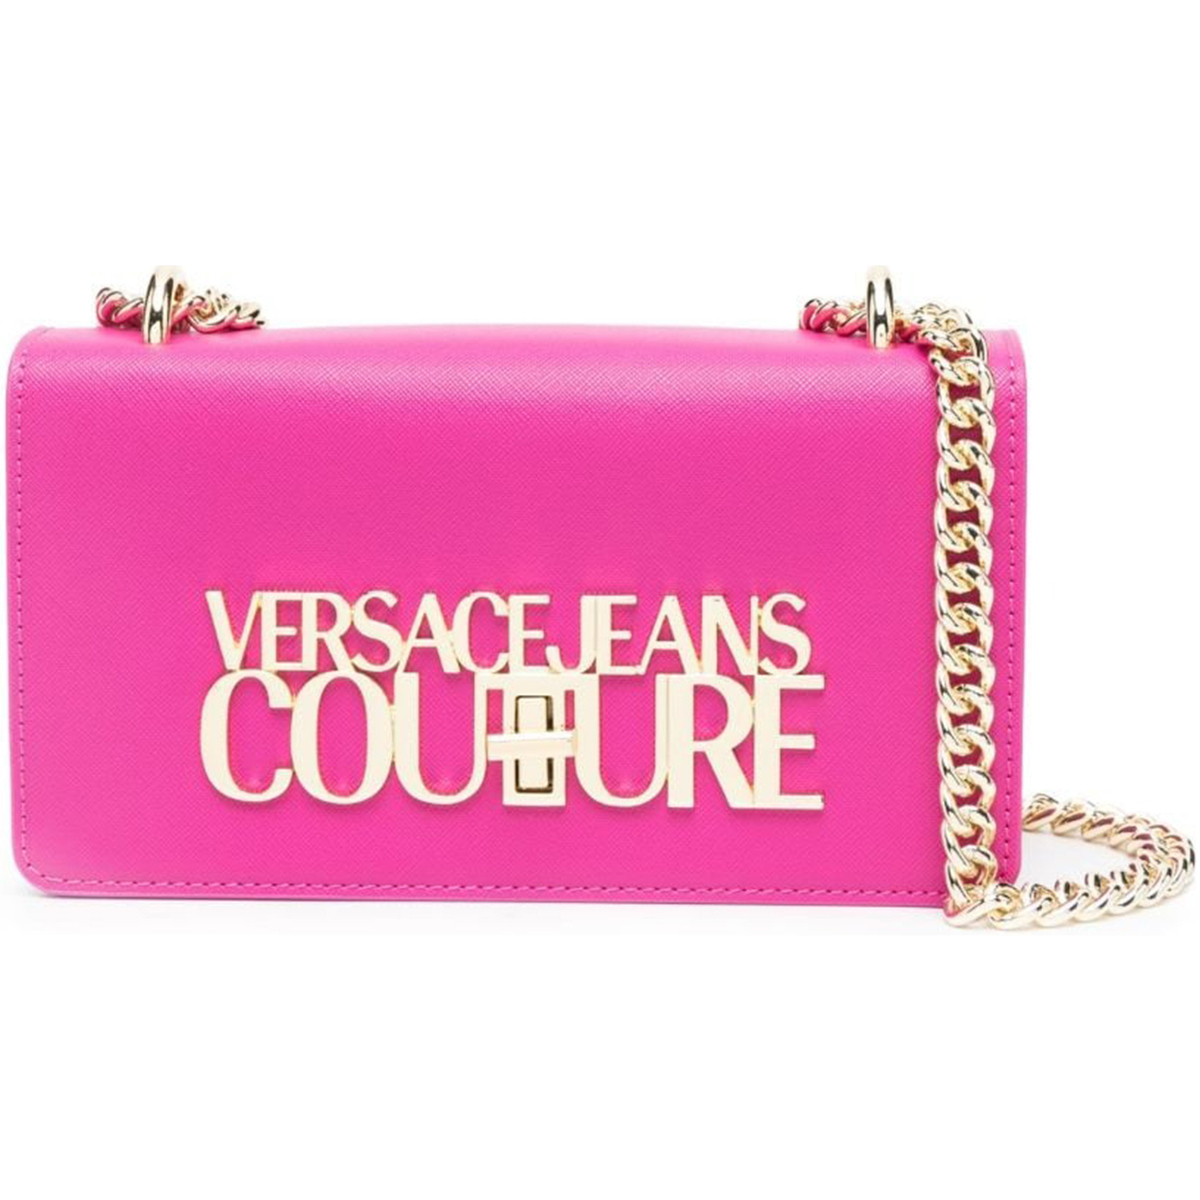 Versace Jeans Couture Rose 75va4bl1zs467-312 qGrAGlii